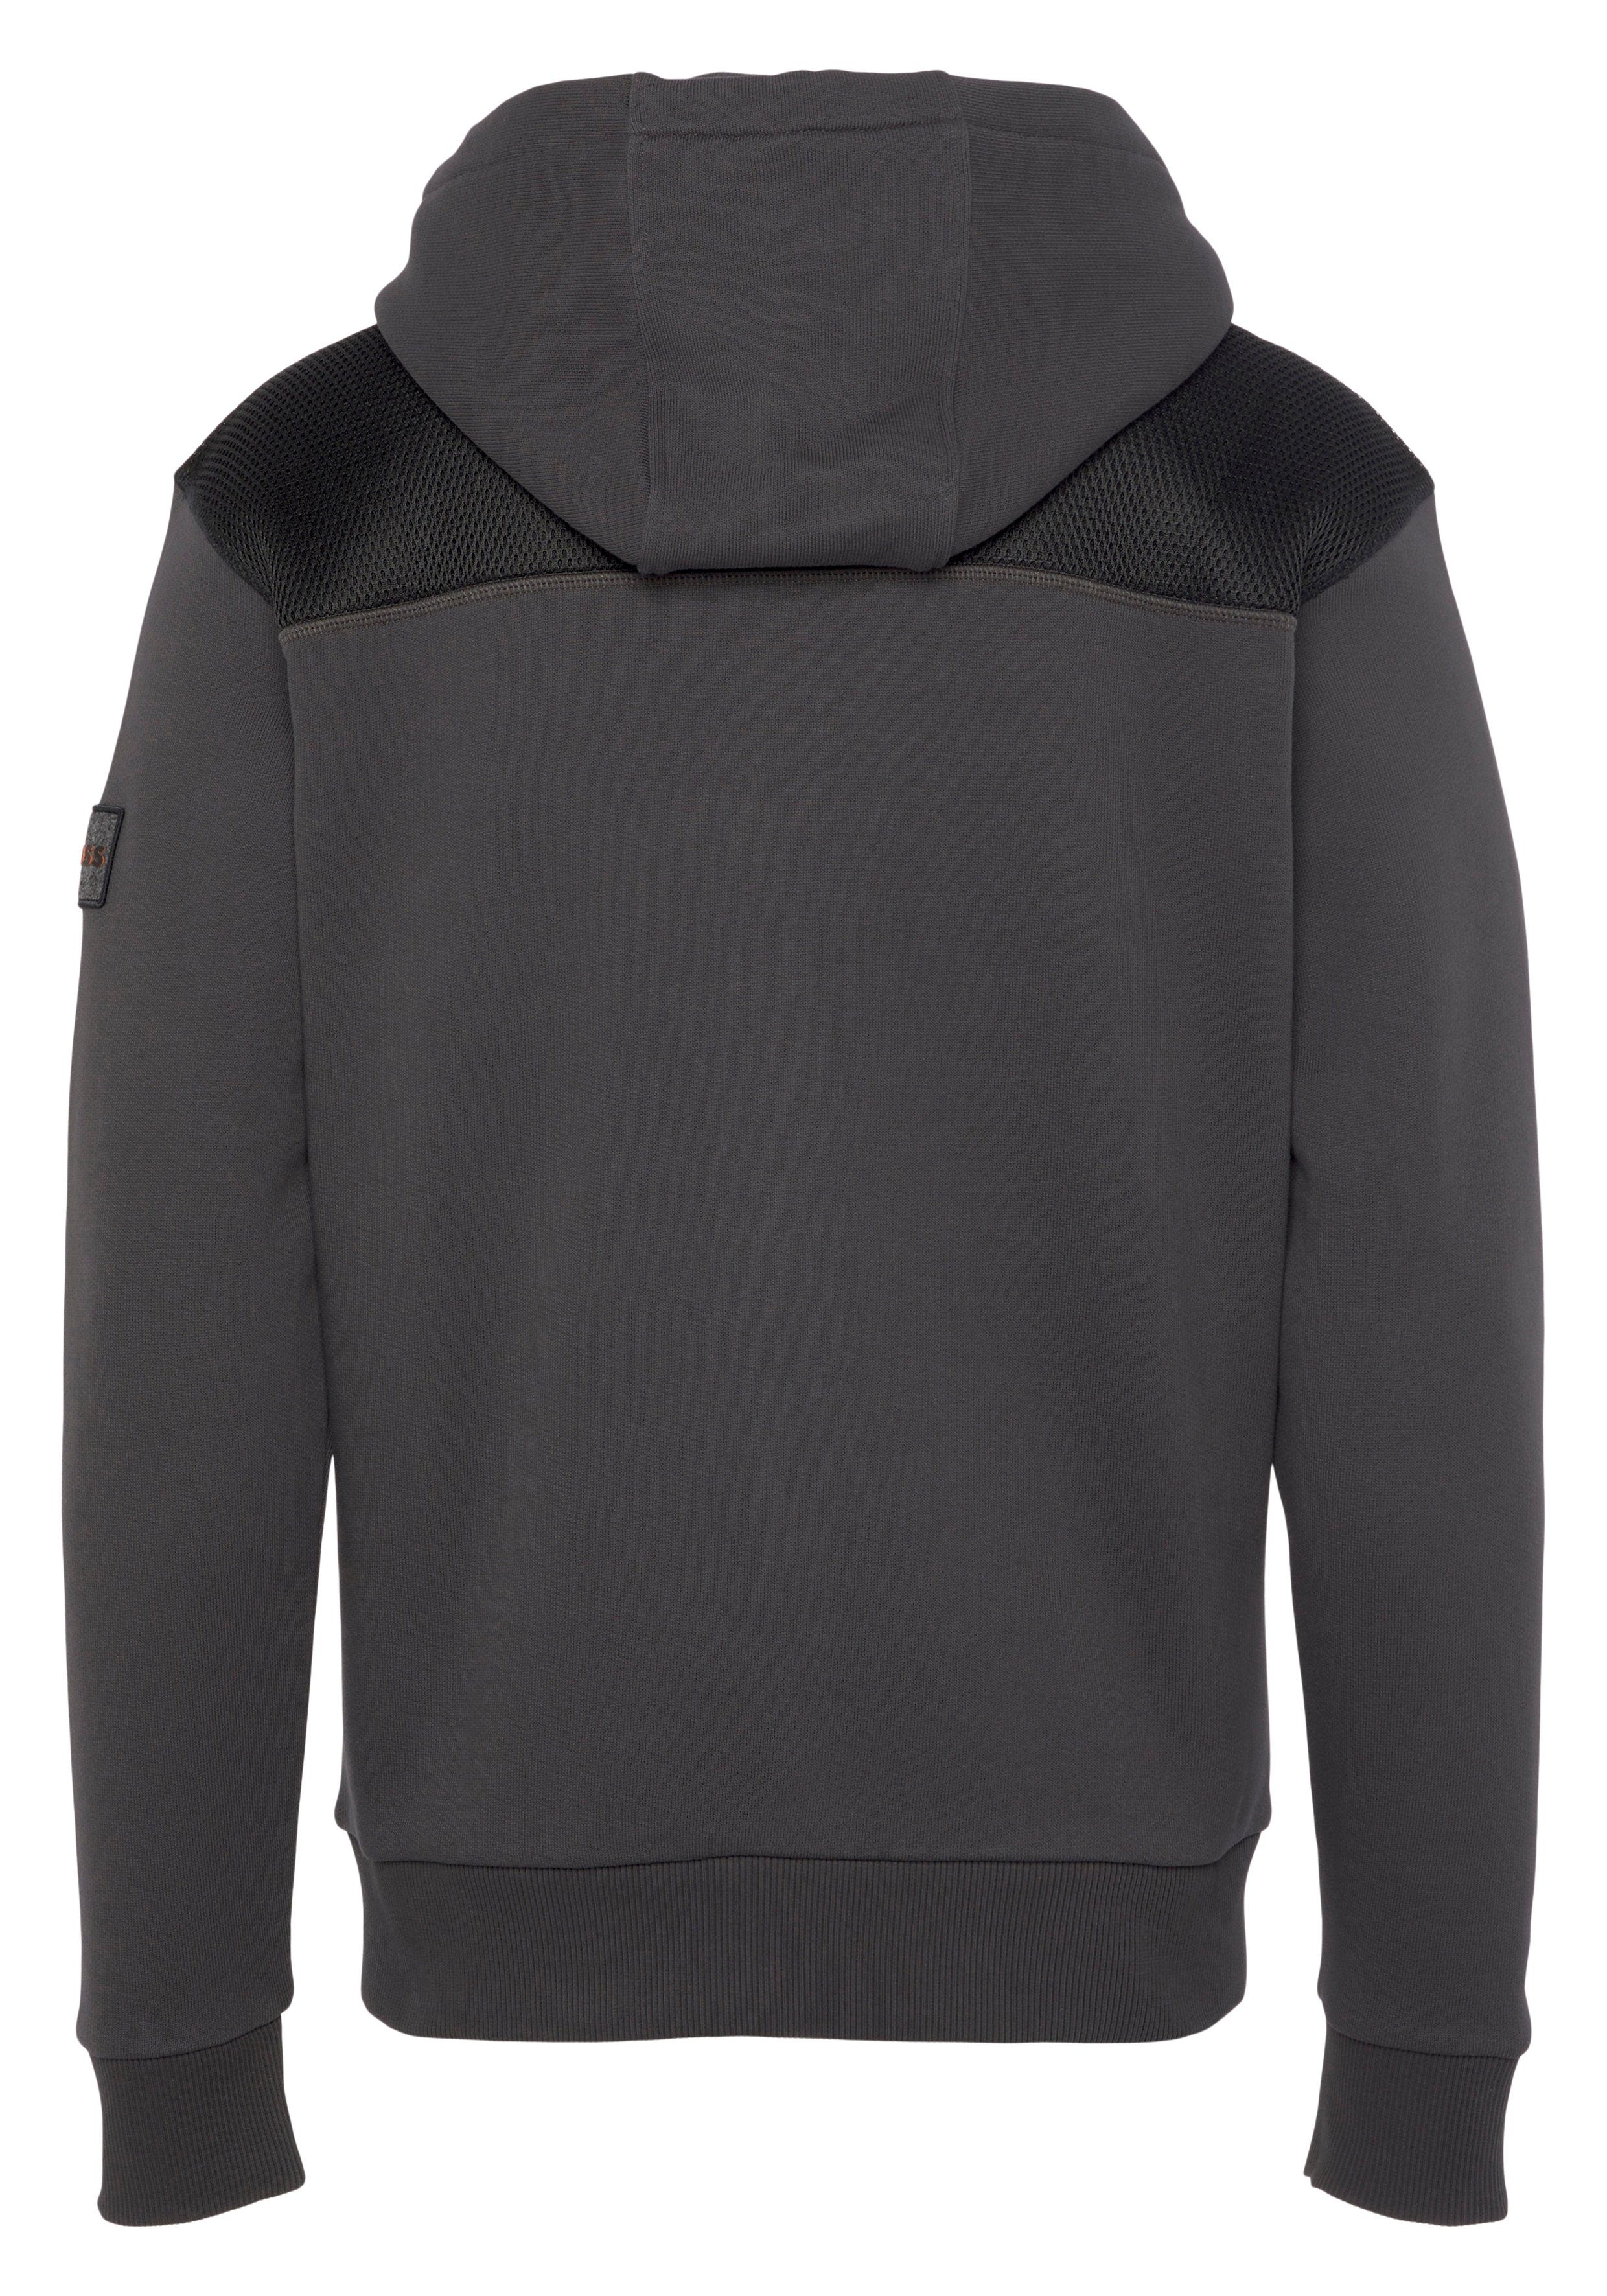 ORANGE von Sweatshirt Menswear BOSS Sweater Kapuze, mit BOSS Werace ORANGE